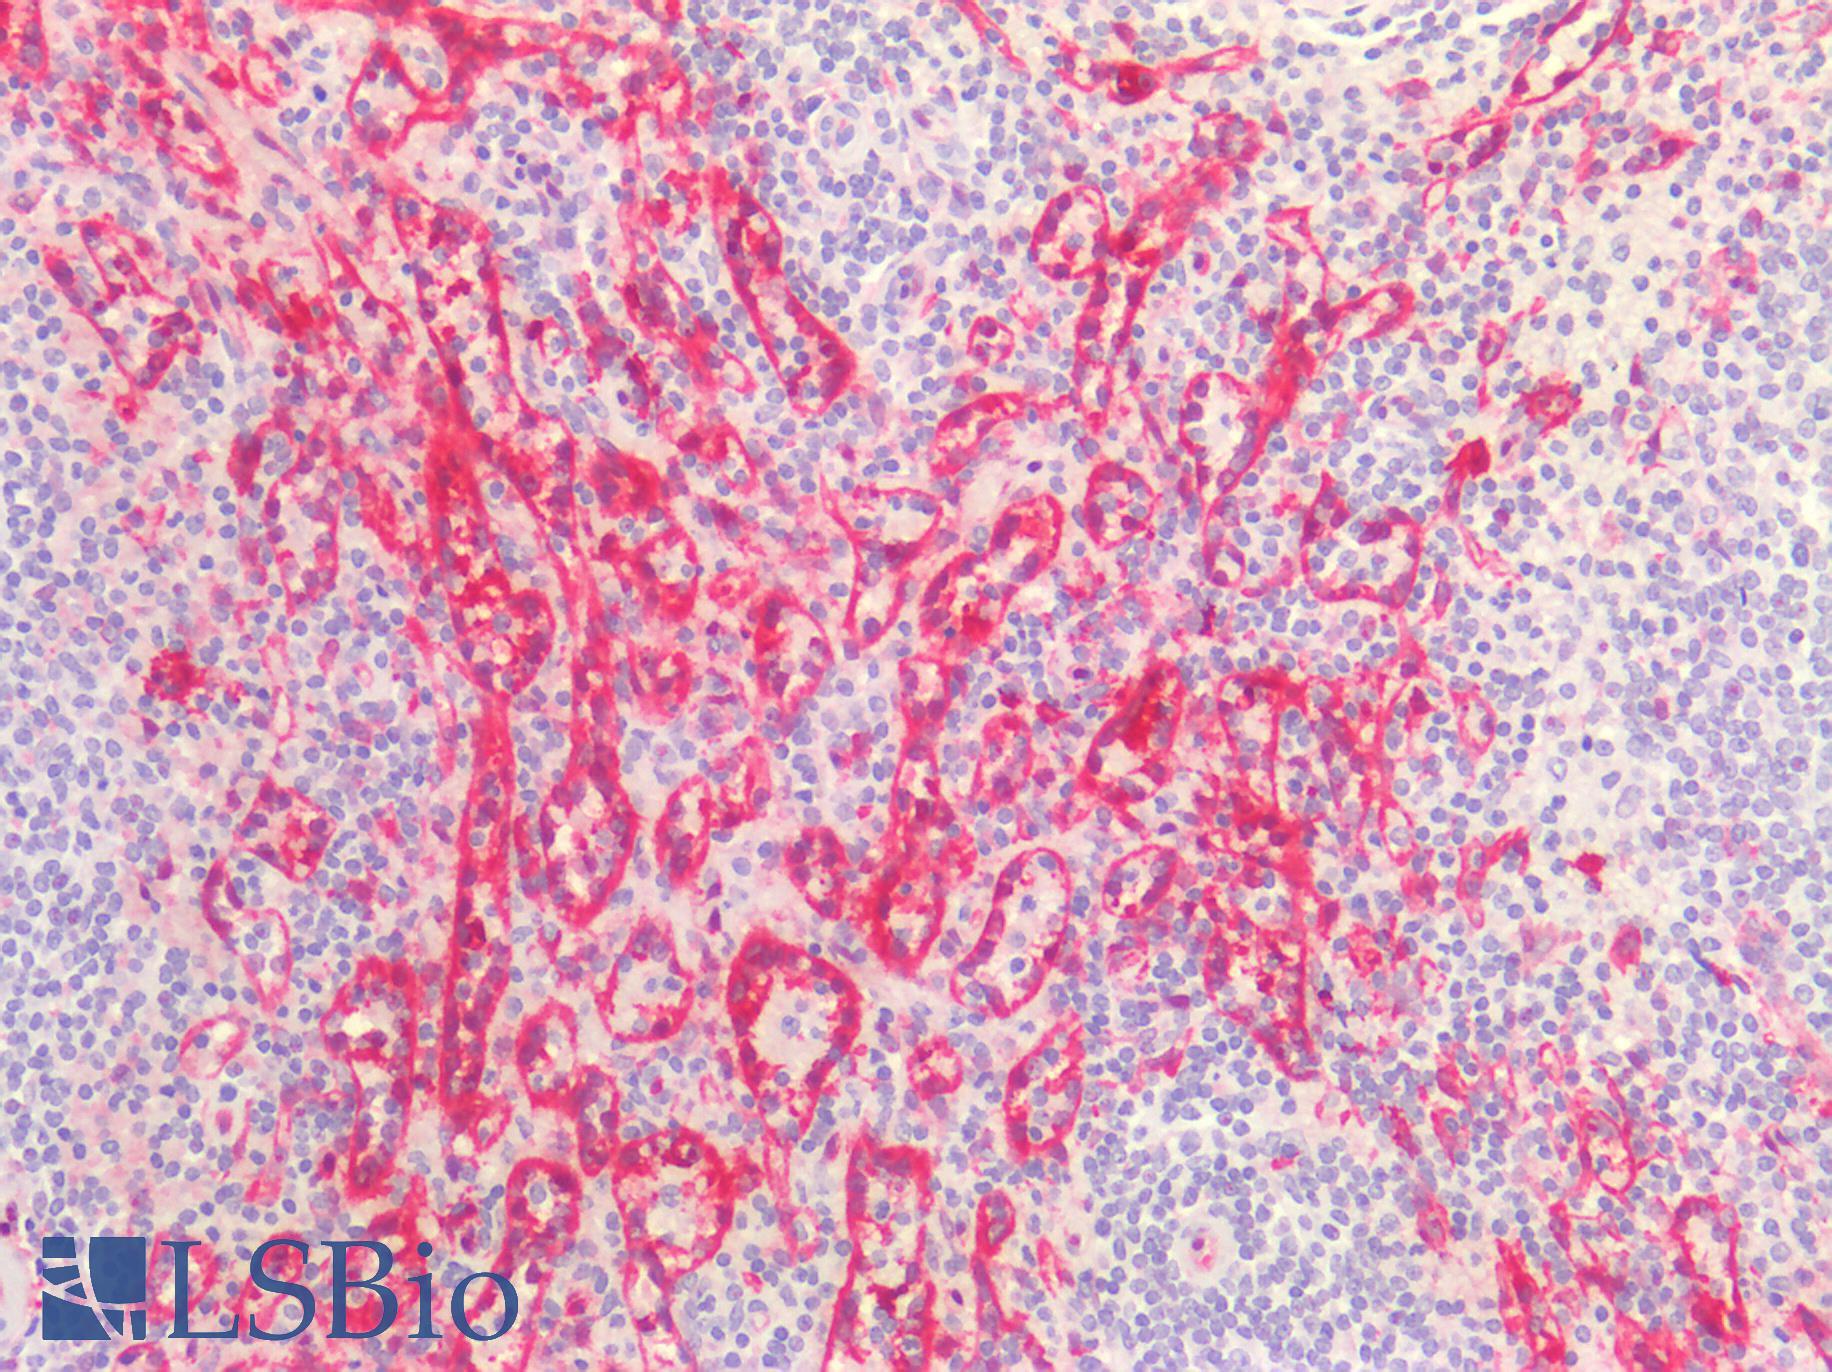 ALDH1A1 / ALDH1 Antibody - Human Spleen: Formalin-Fixed, Paraffin-Embedded (FFPE)